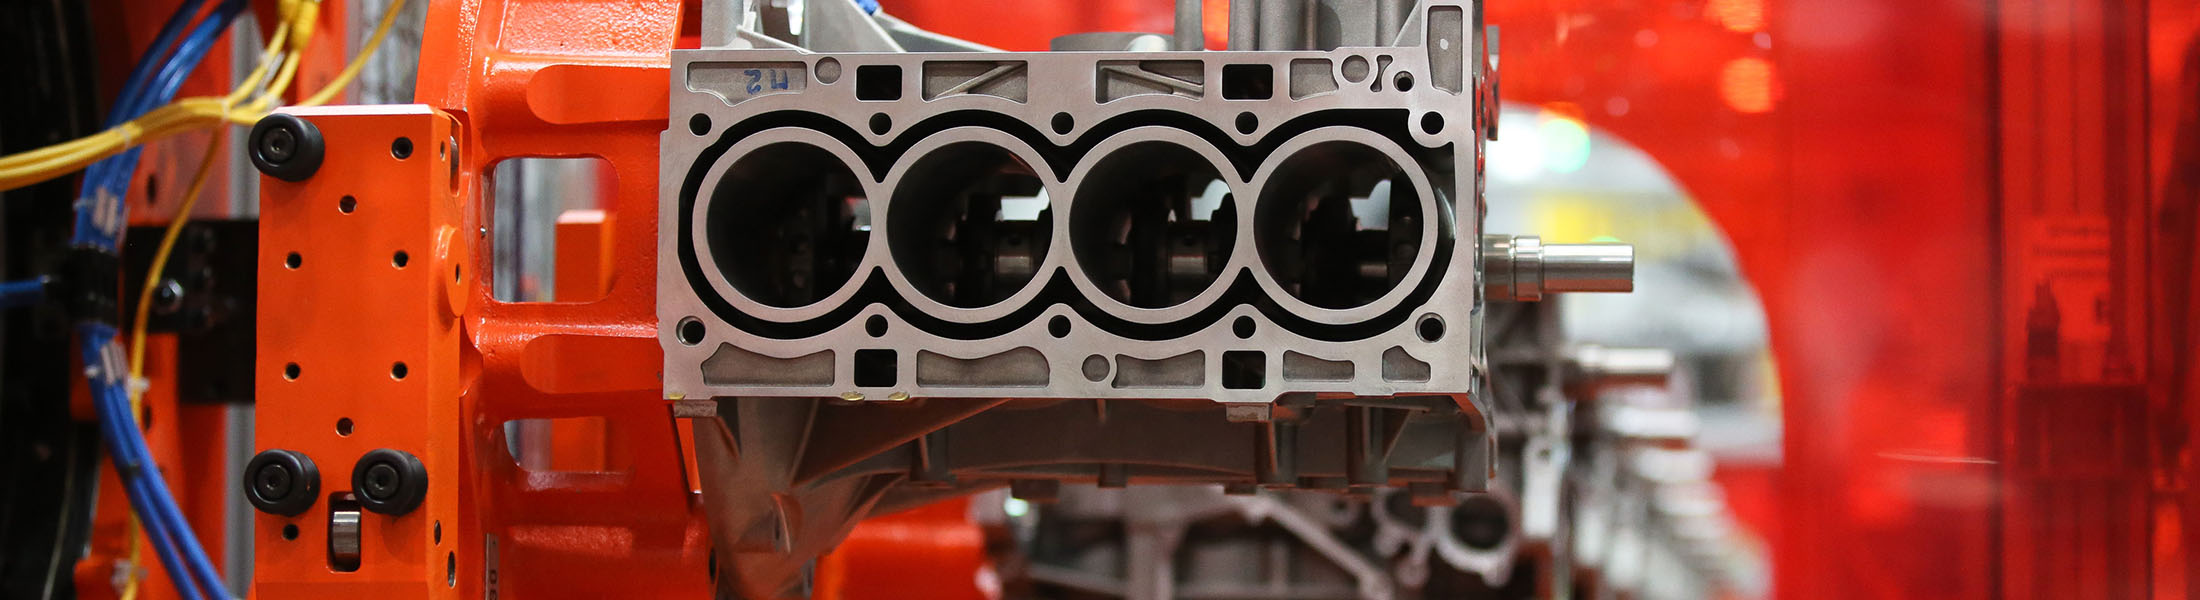 Detailed Car Engine Model Aramco